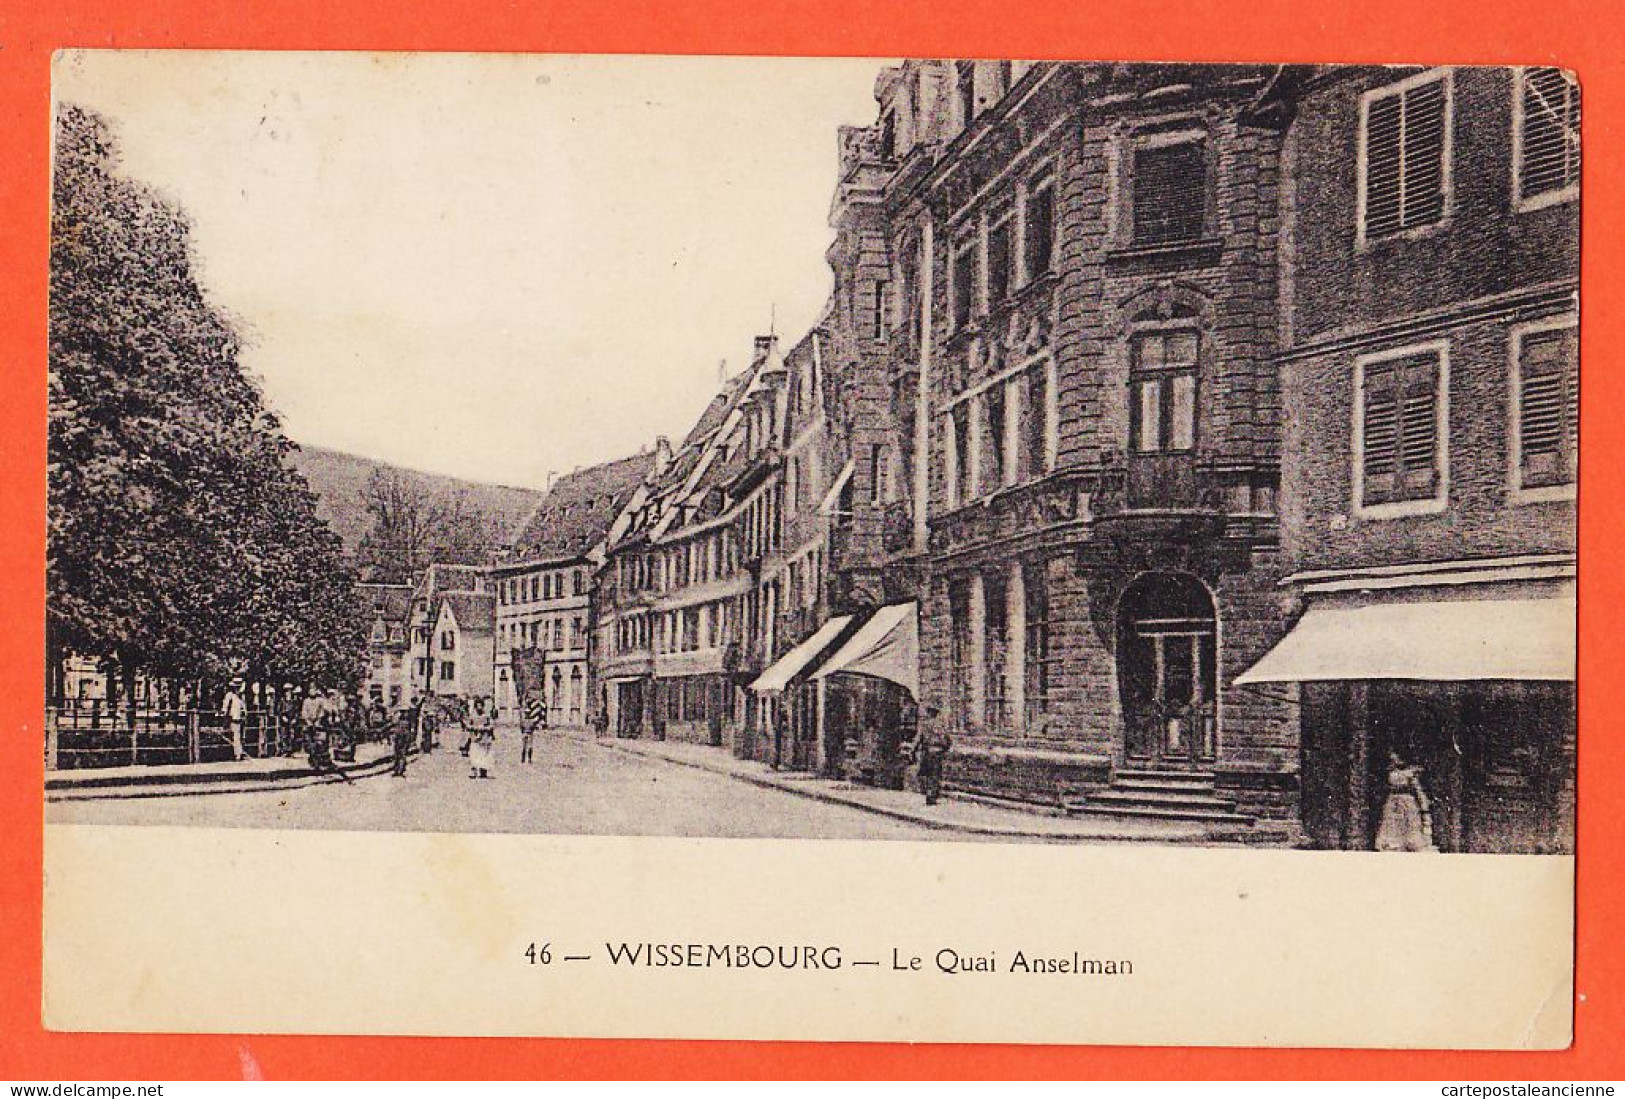 05319 ● ● Alsace WISSEMBOURG (67) Weissenburg Quai ANSELMANN 1924 BARBILAT Inspecteur Forêts Langres-ACKERMANN 46 - Wissembourg